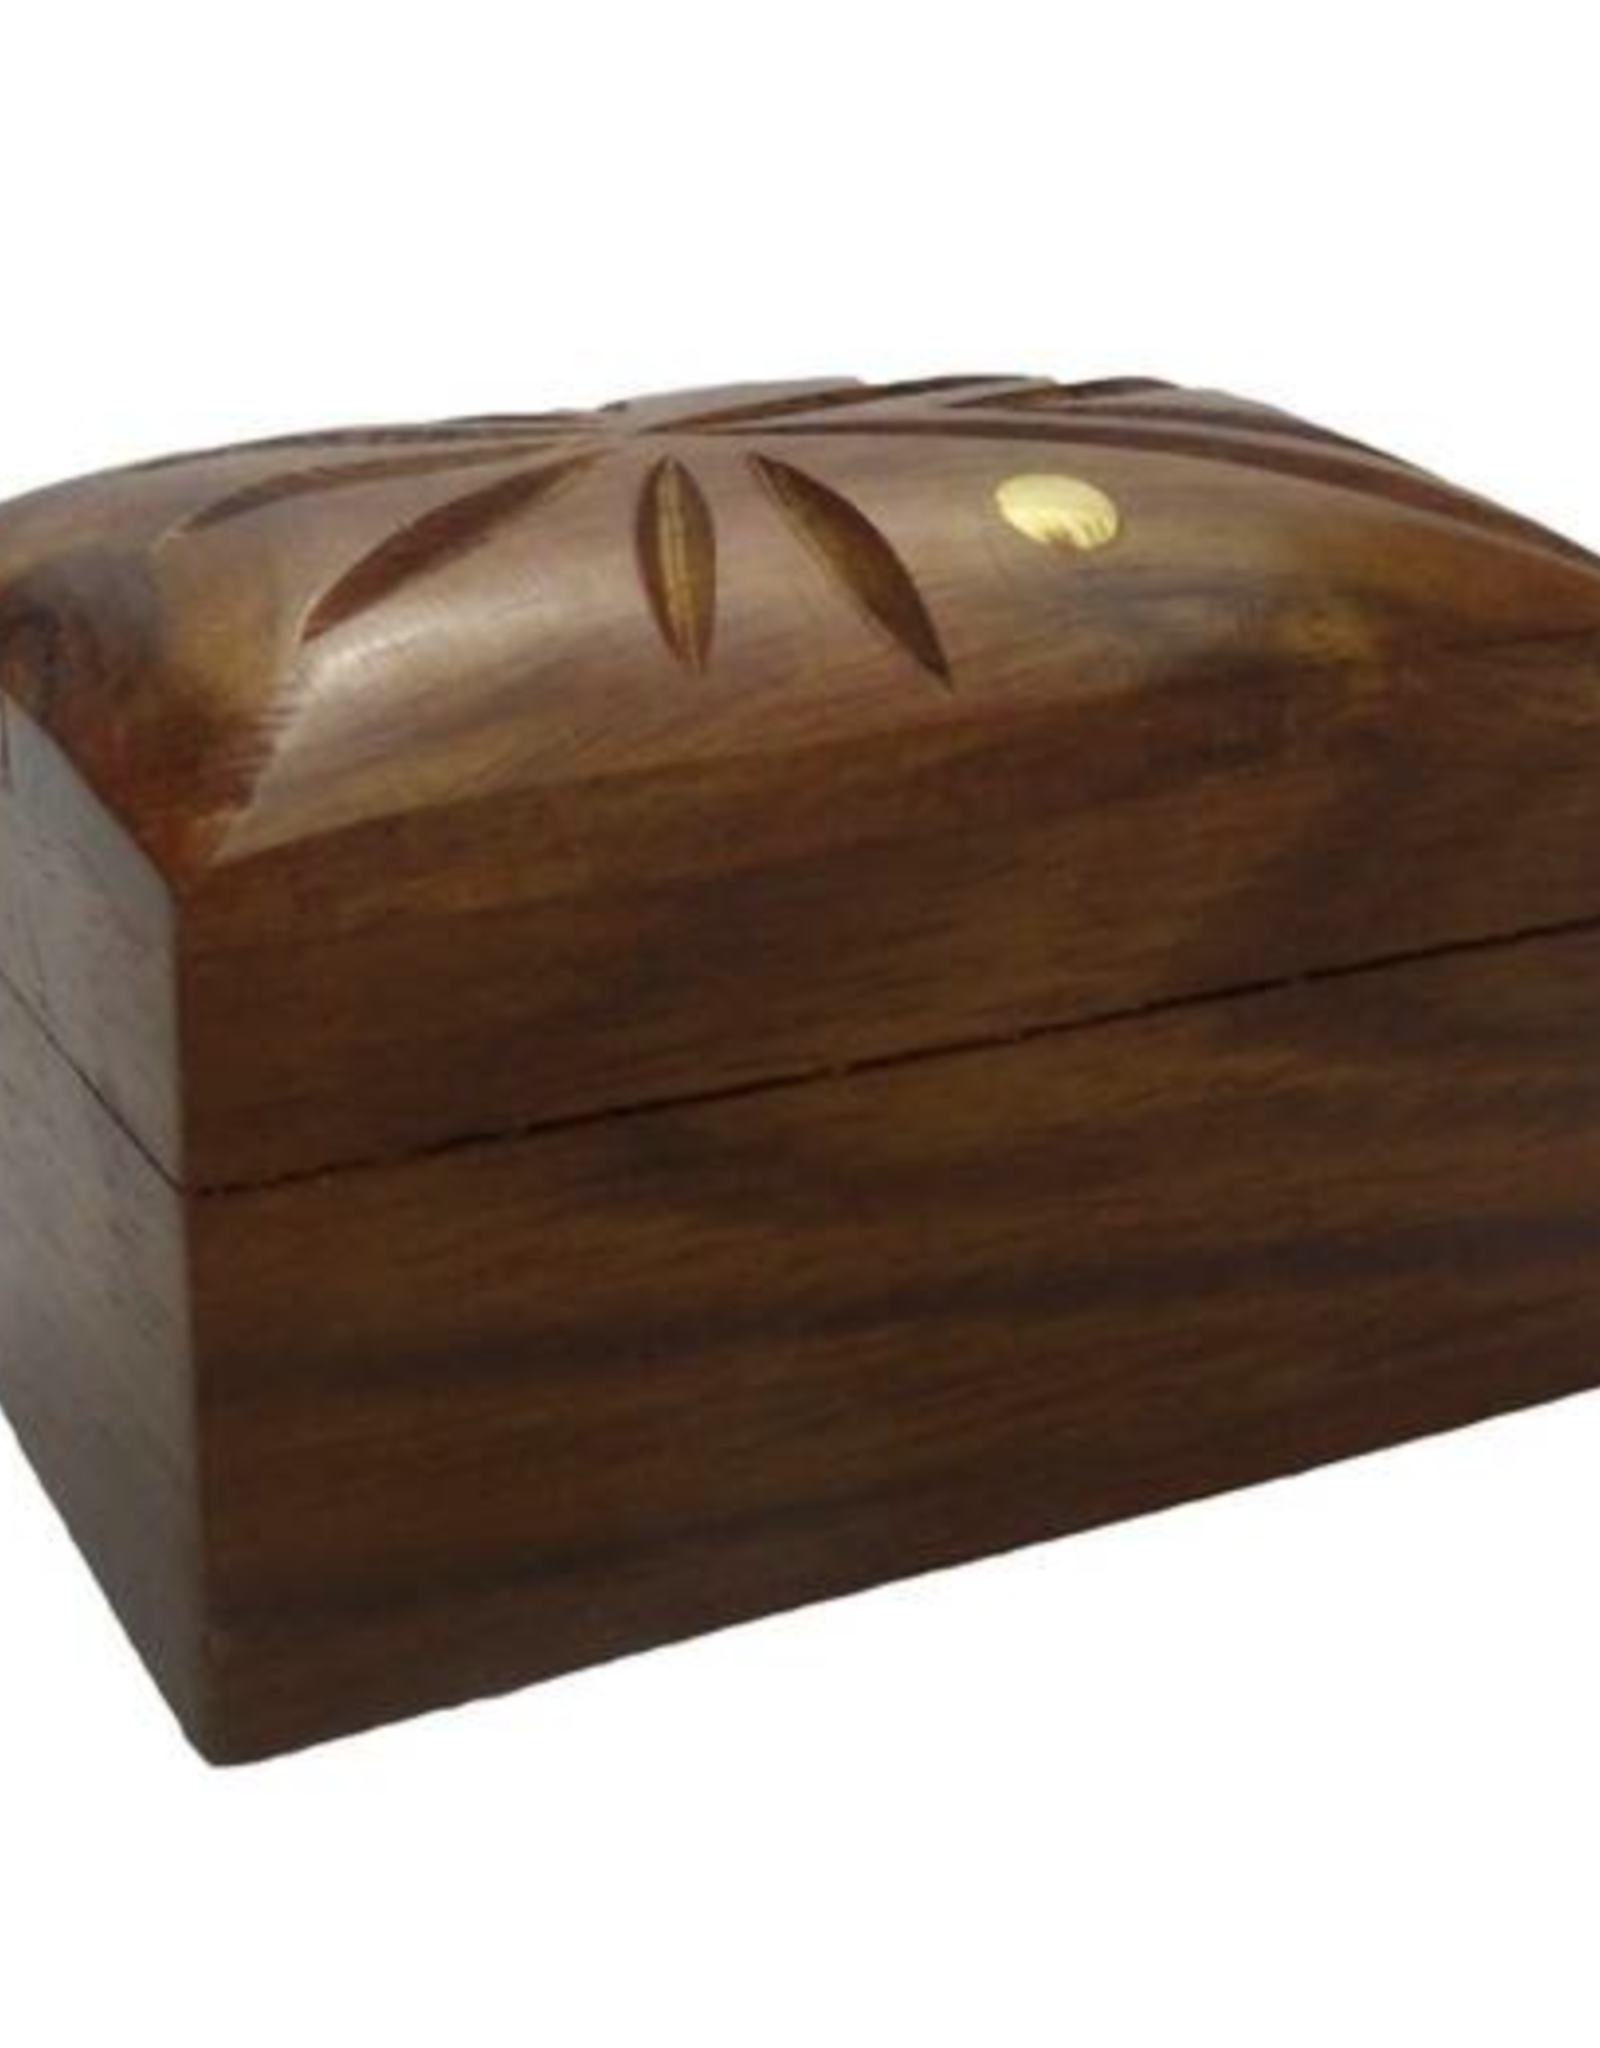 3" x 2" Wood Box w/ Carved Inlay